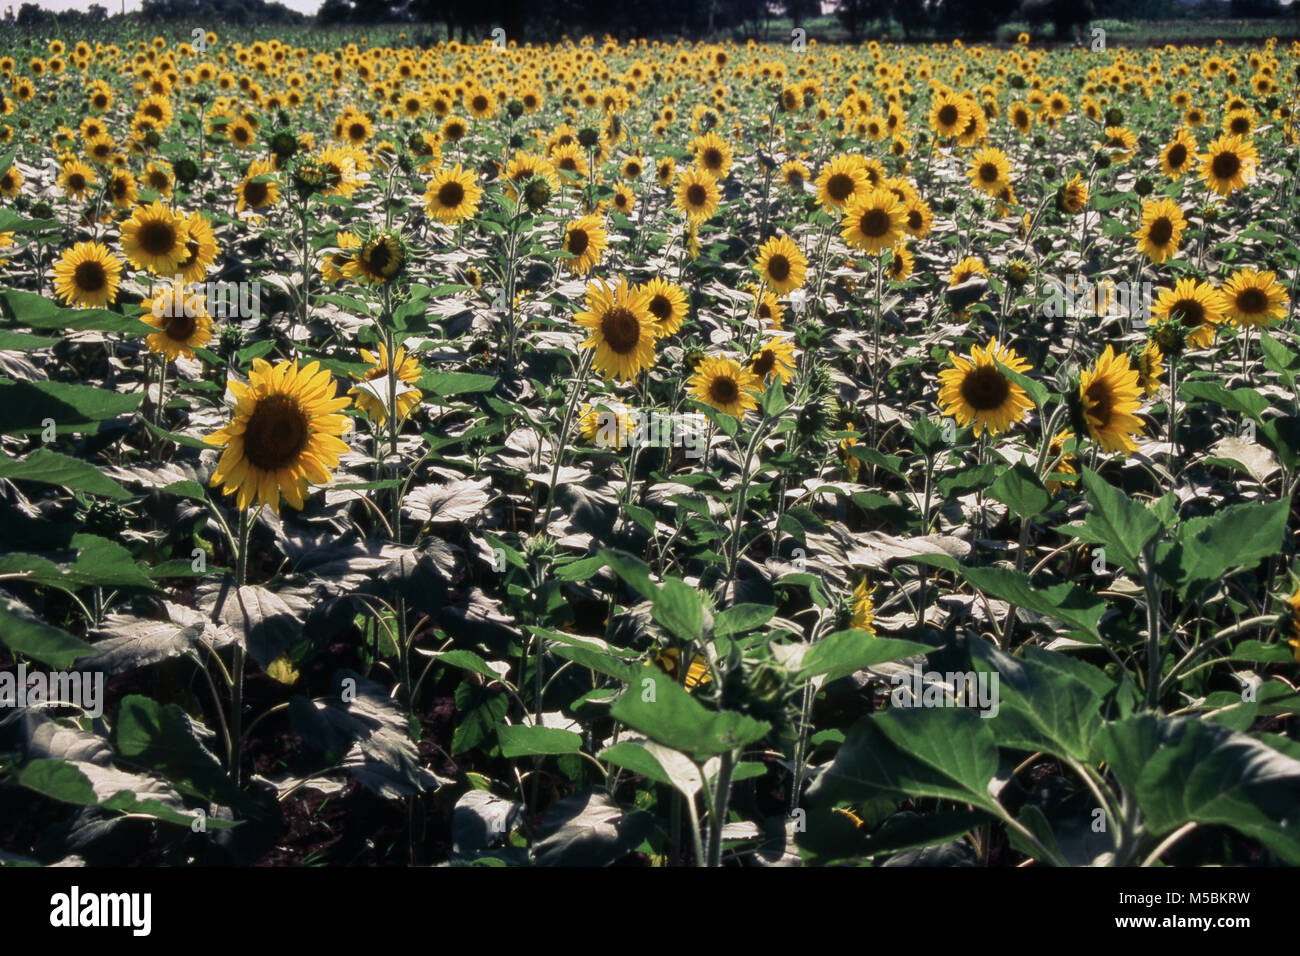 beautiful sunflower of india stock photos & beautiful sunflower of